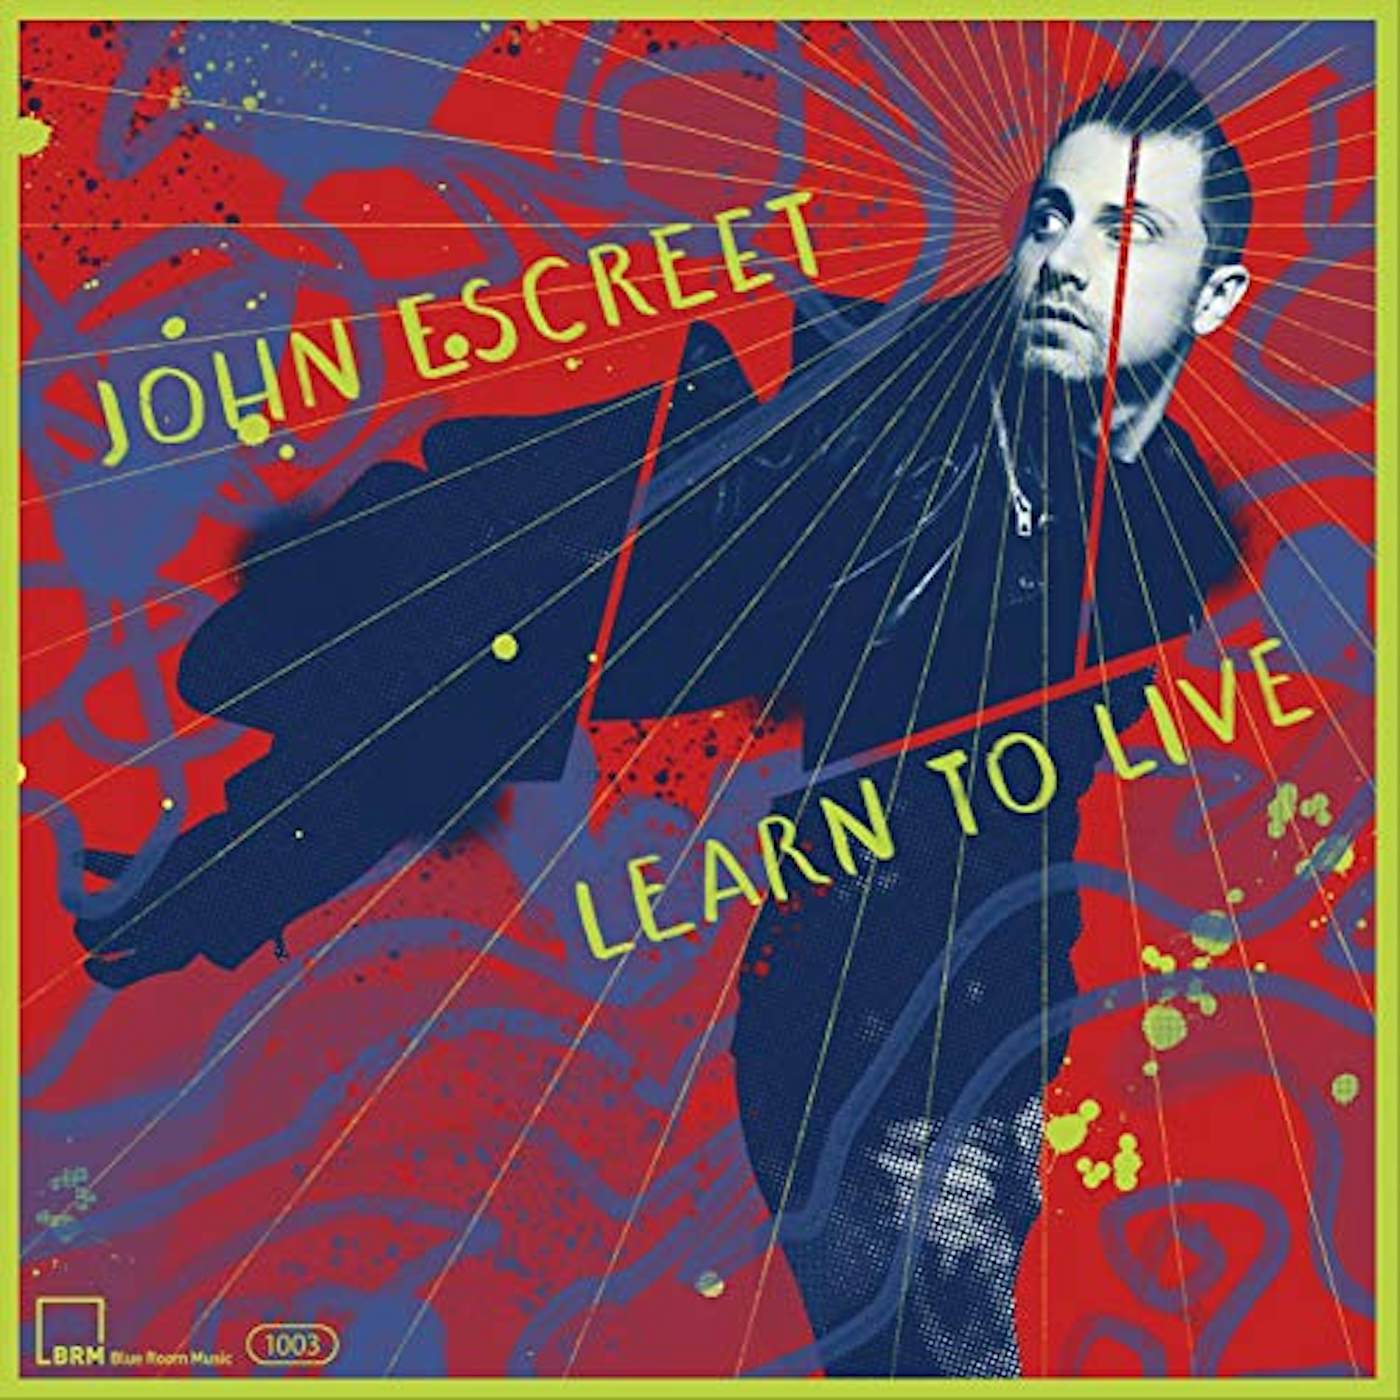 John Escreet Learn To Live CD